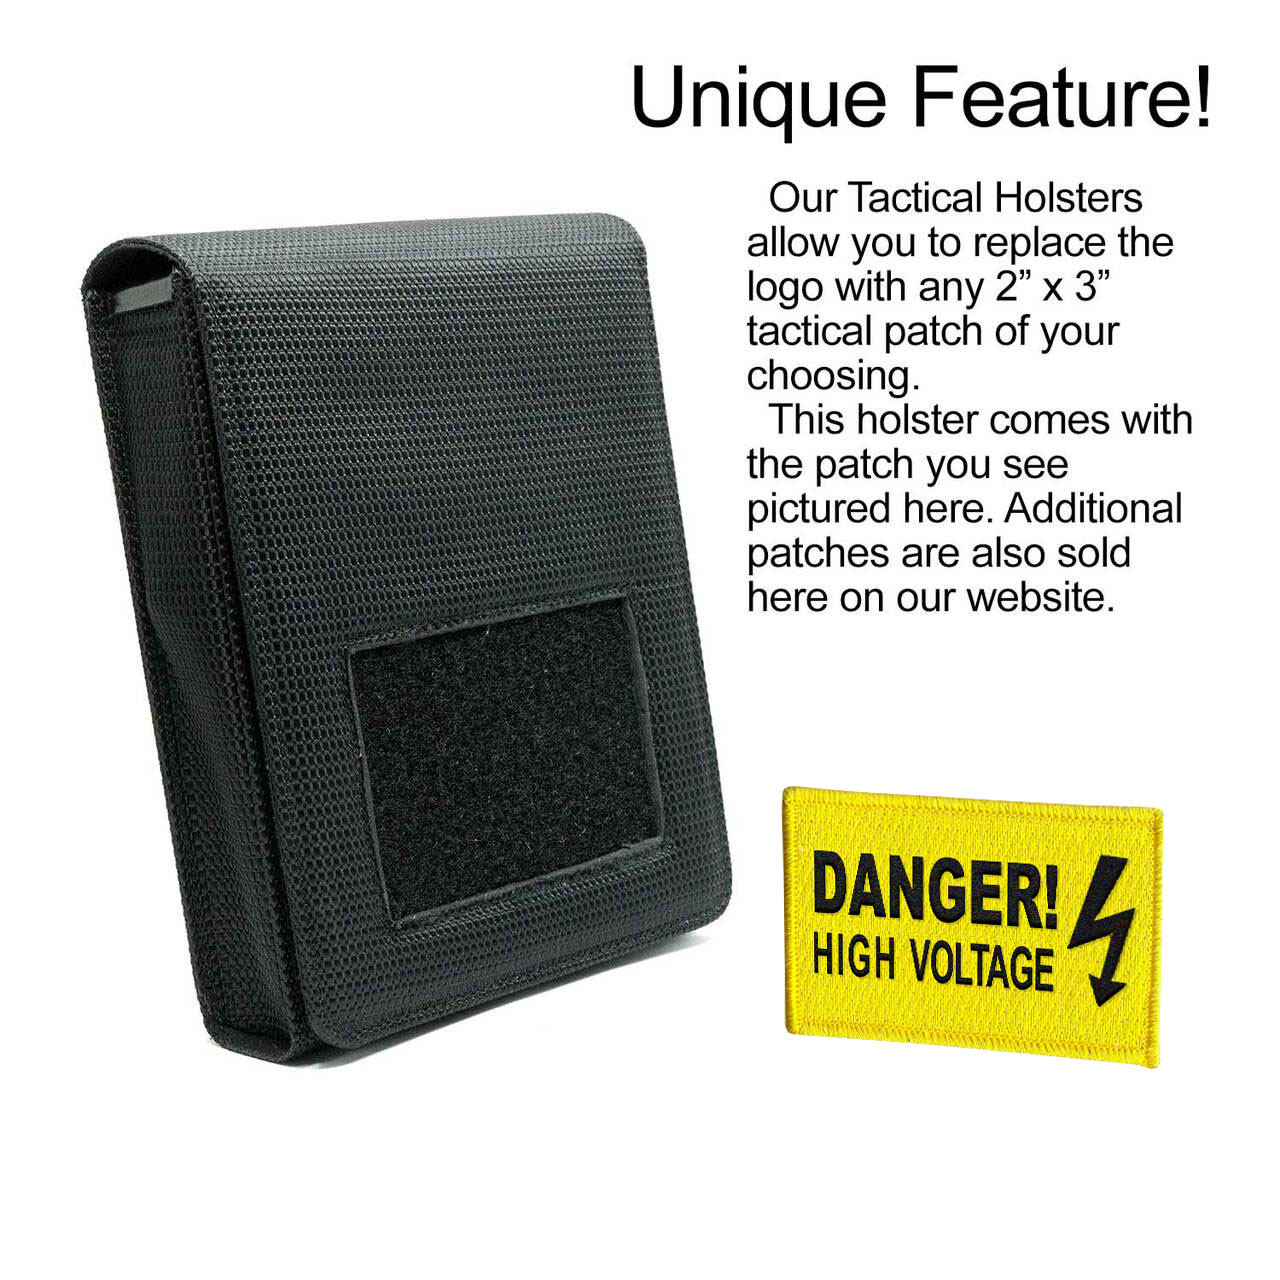 Danger High Voltage Tactical Holster for the Glock 22